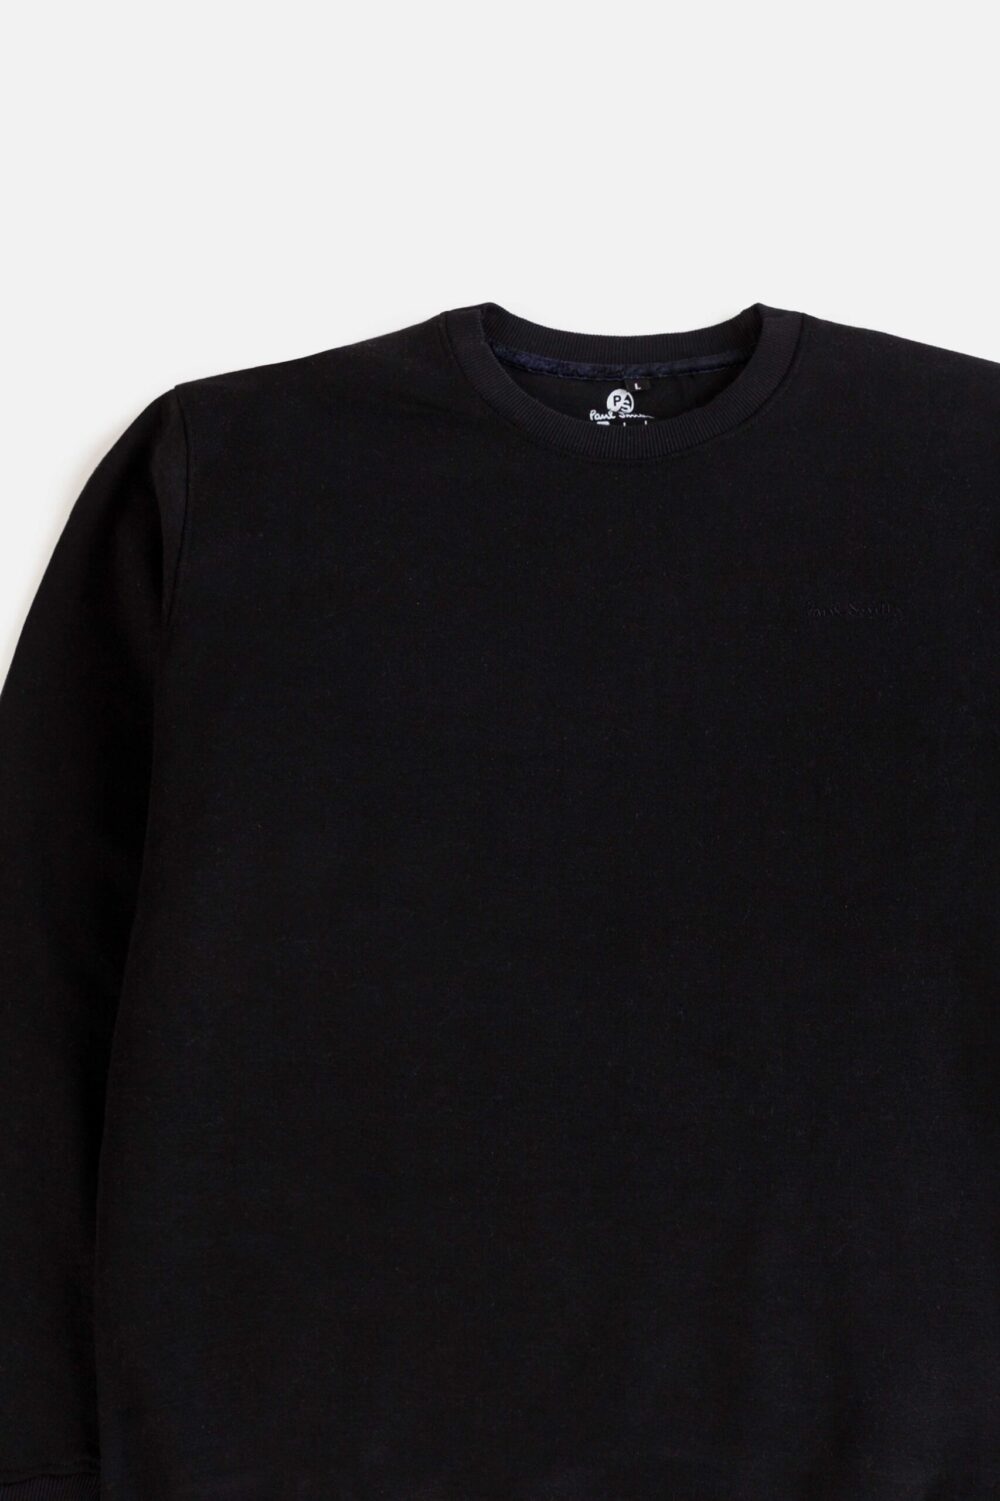 Paul Smith Original Premium Fleece Sweatshirt – Black